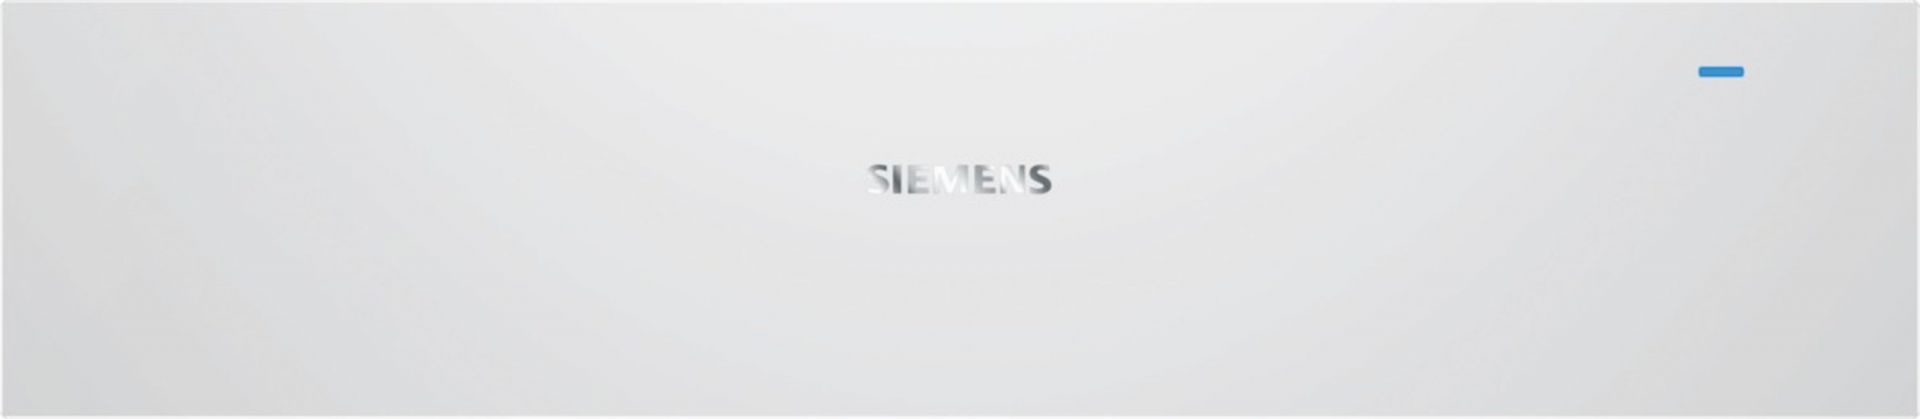 Fot. Siemens.